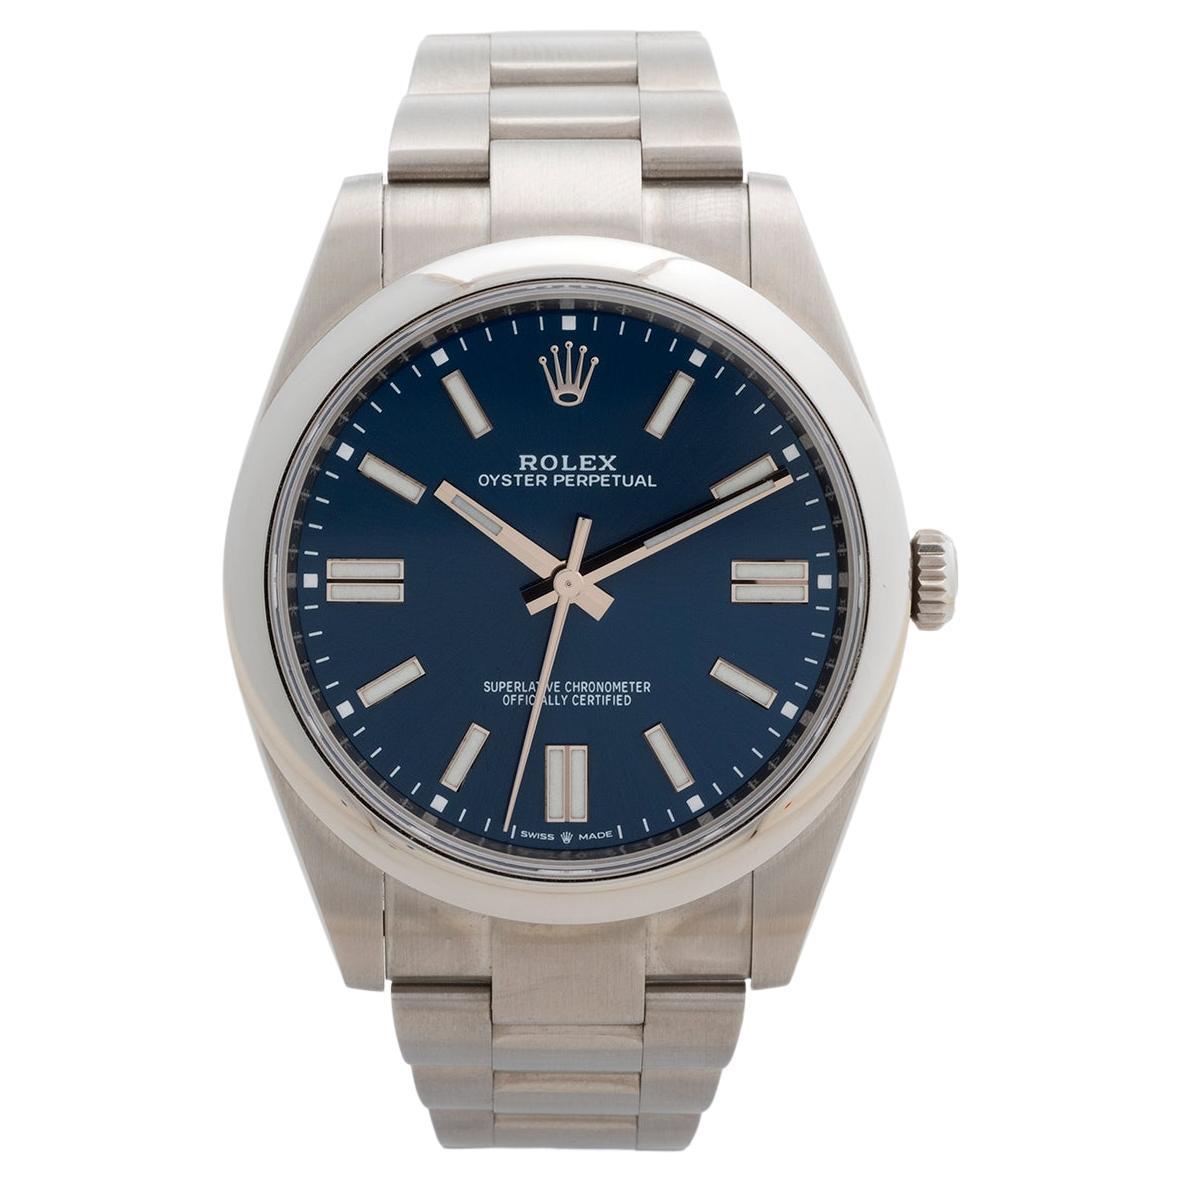 Rolex Oyster Perpetual Wristwatch Ref 124300. Waiting List Watch.